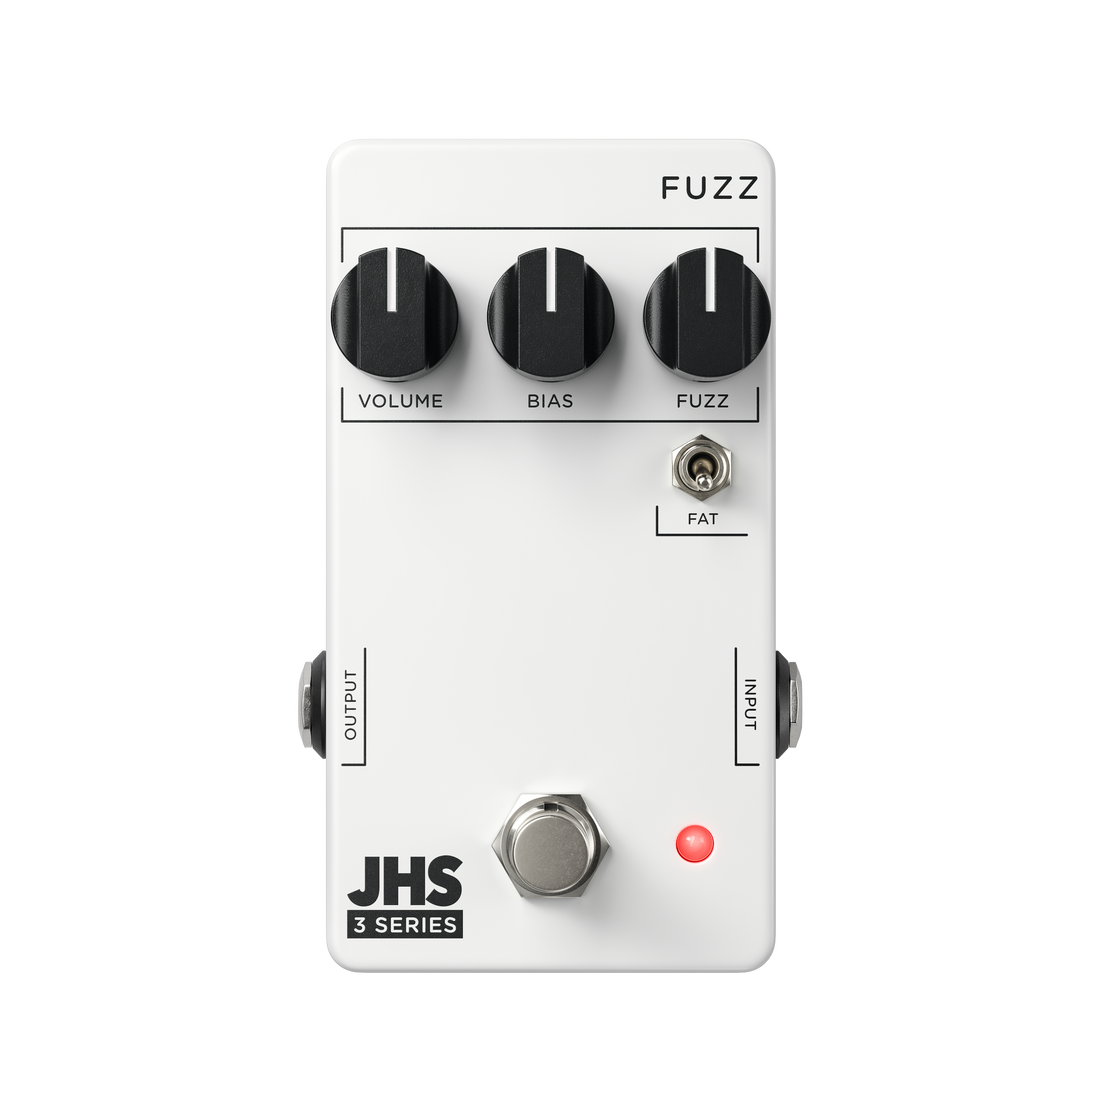 JHS 3 series fuzz